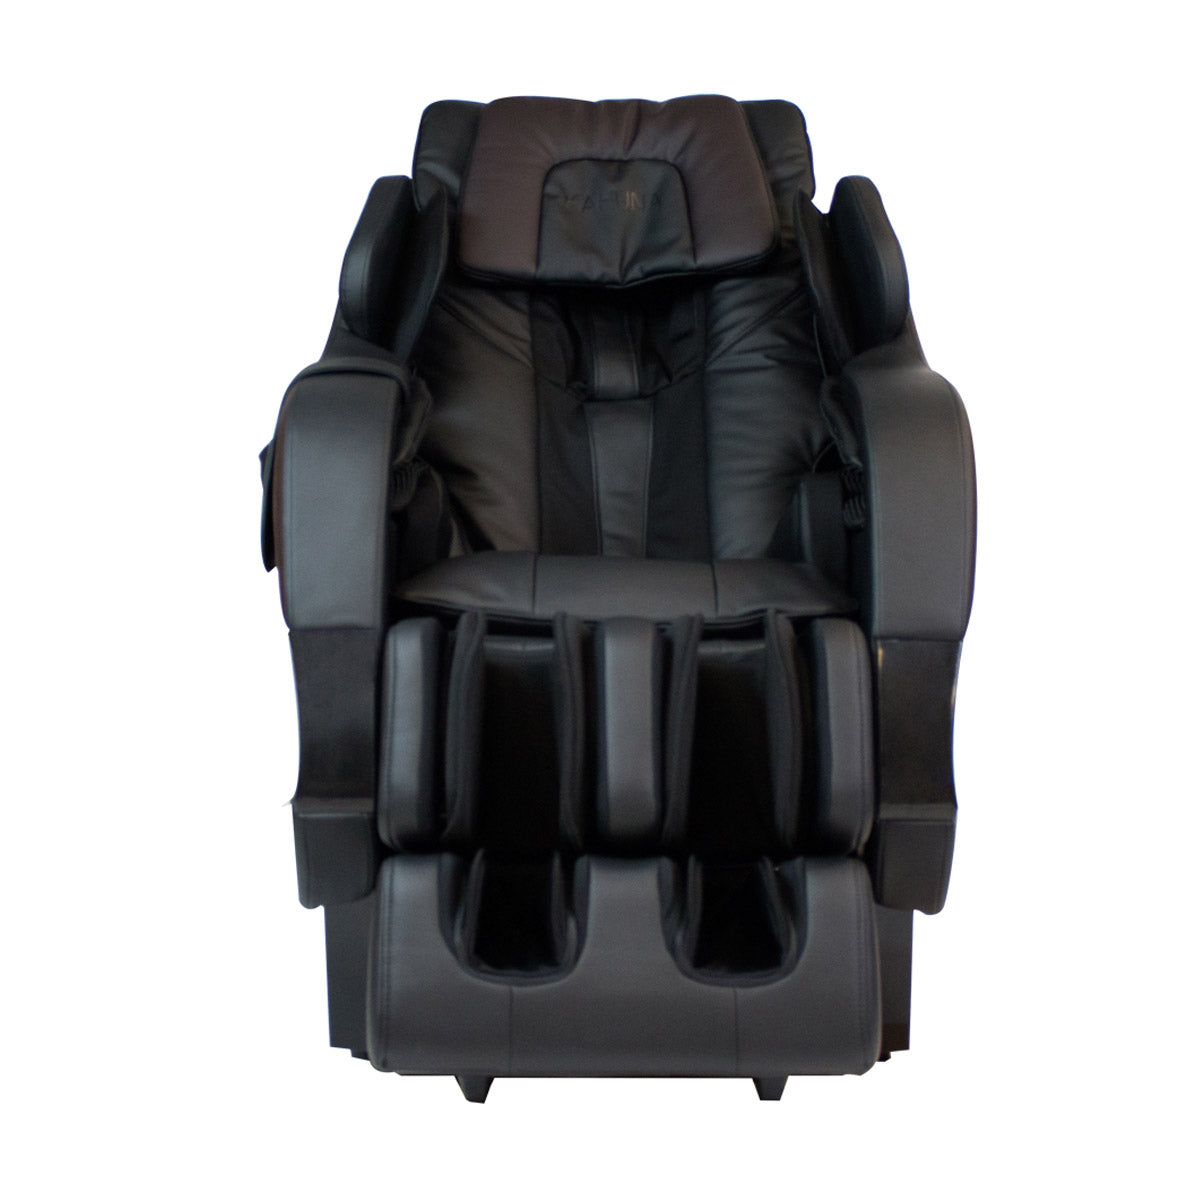 Kahuna SM-7300 Massage Chair Black Front